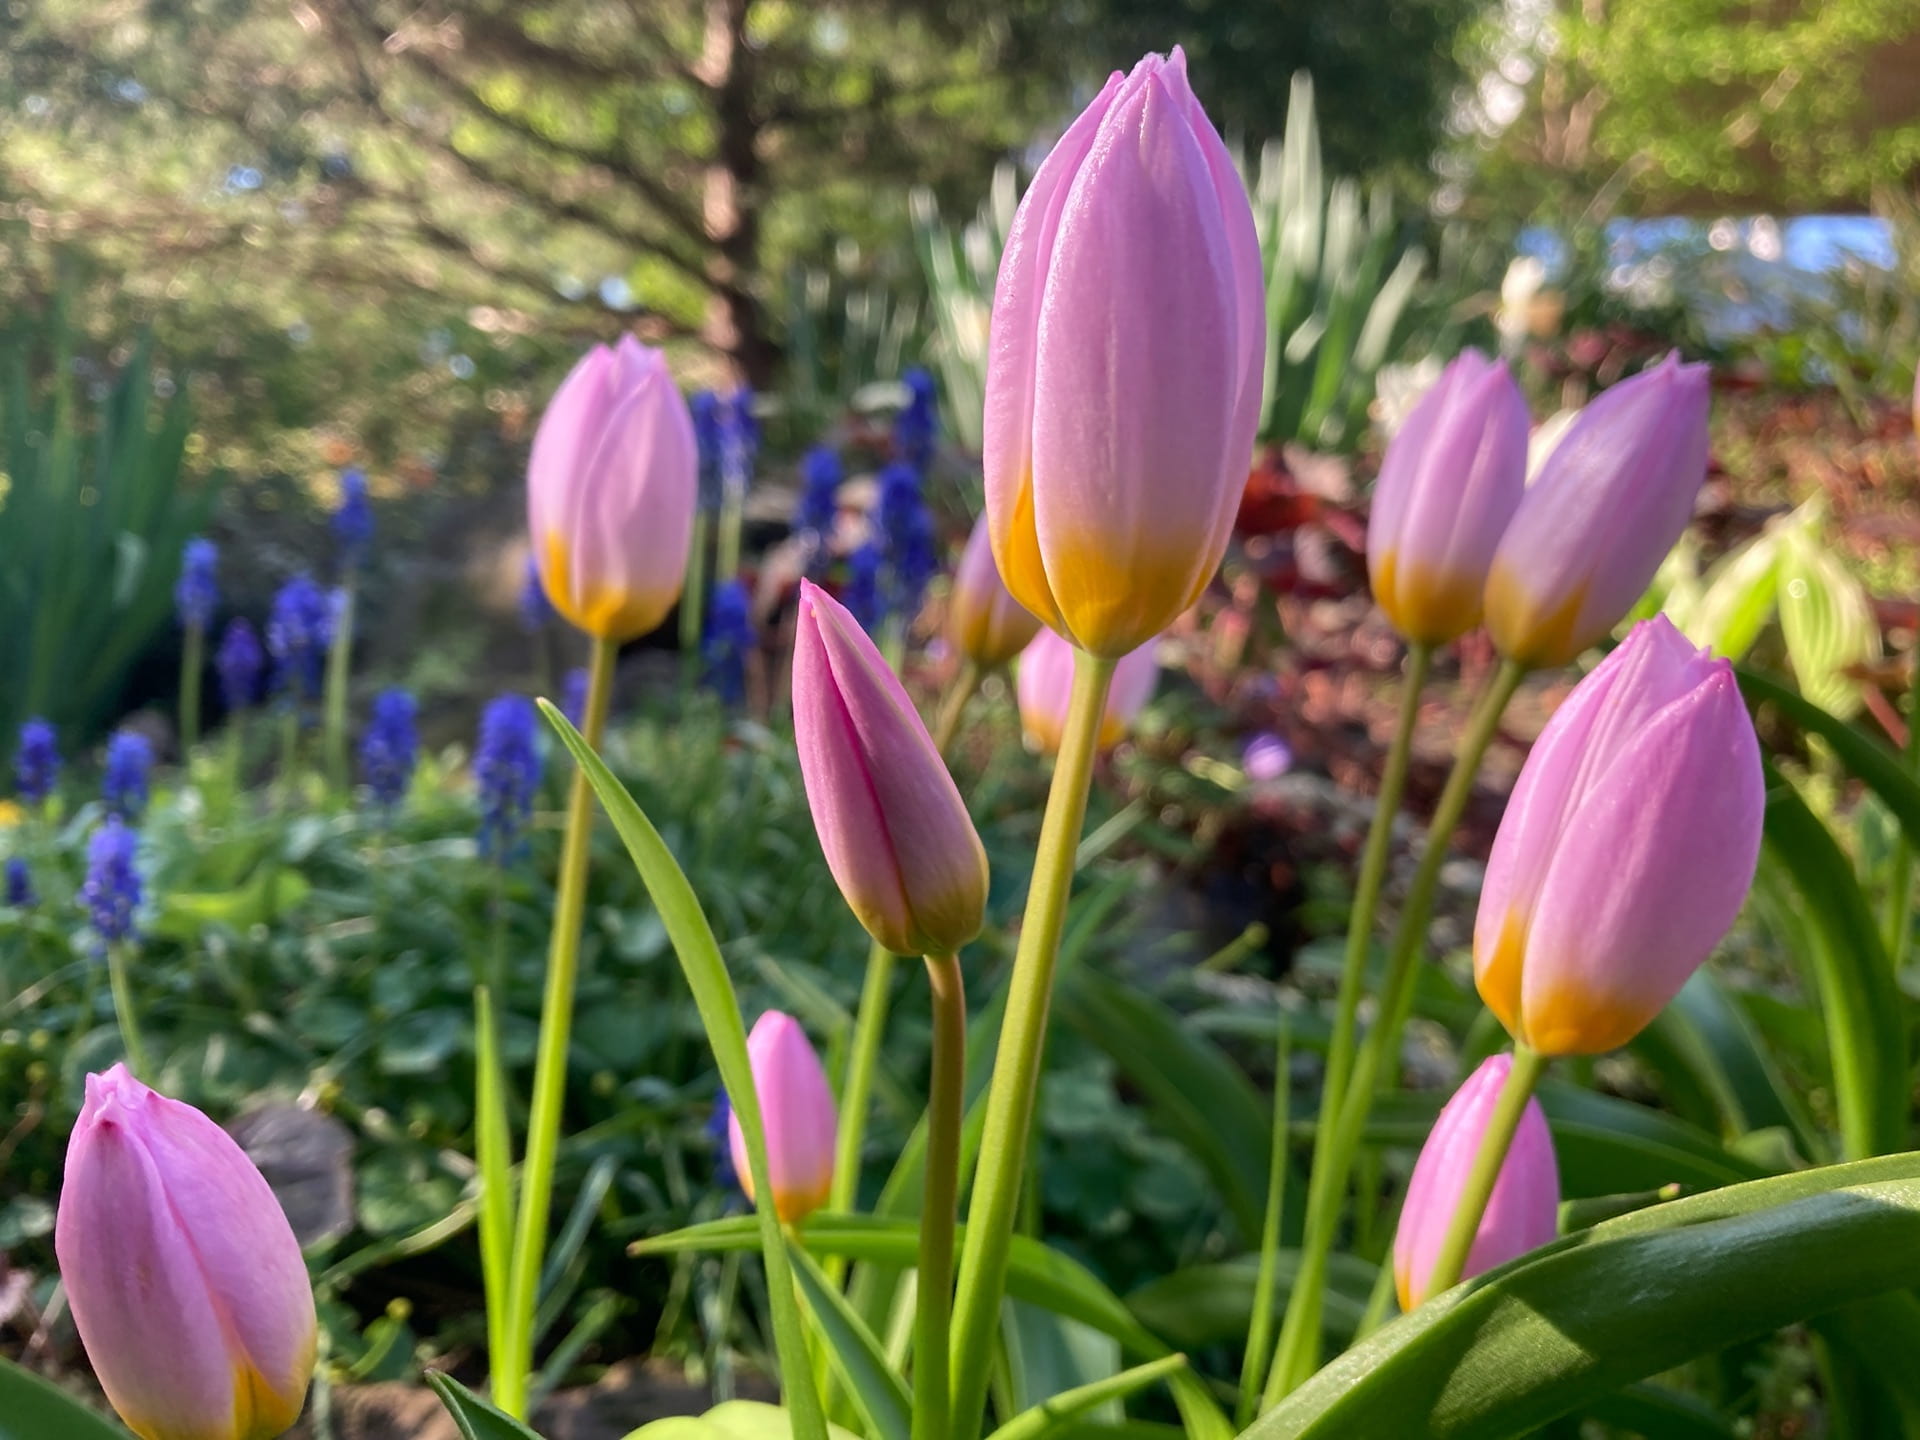 Species tulips, like this Tulipa saxatilis, grow in the Goddard Garden.